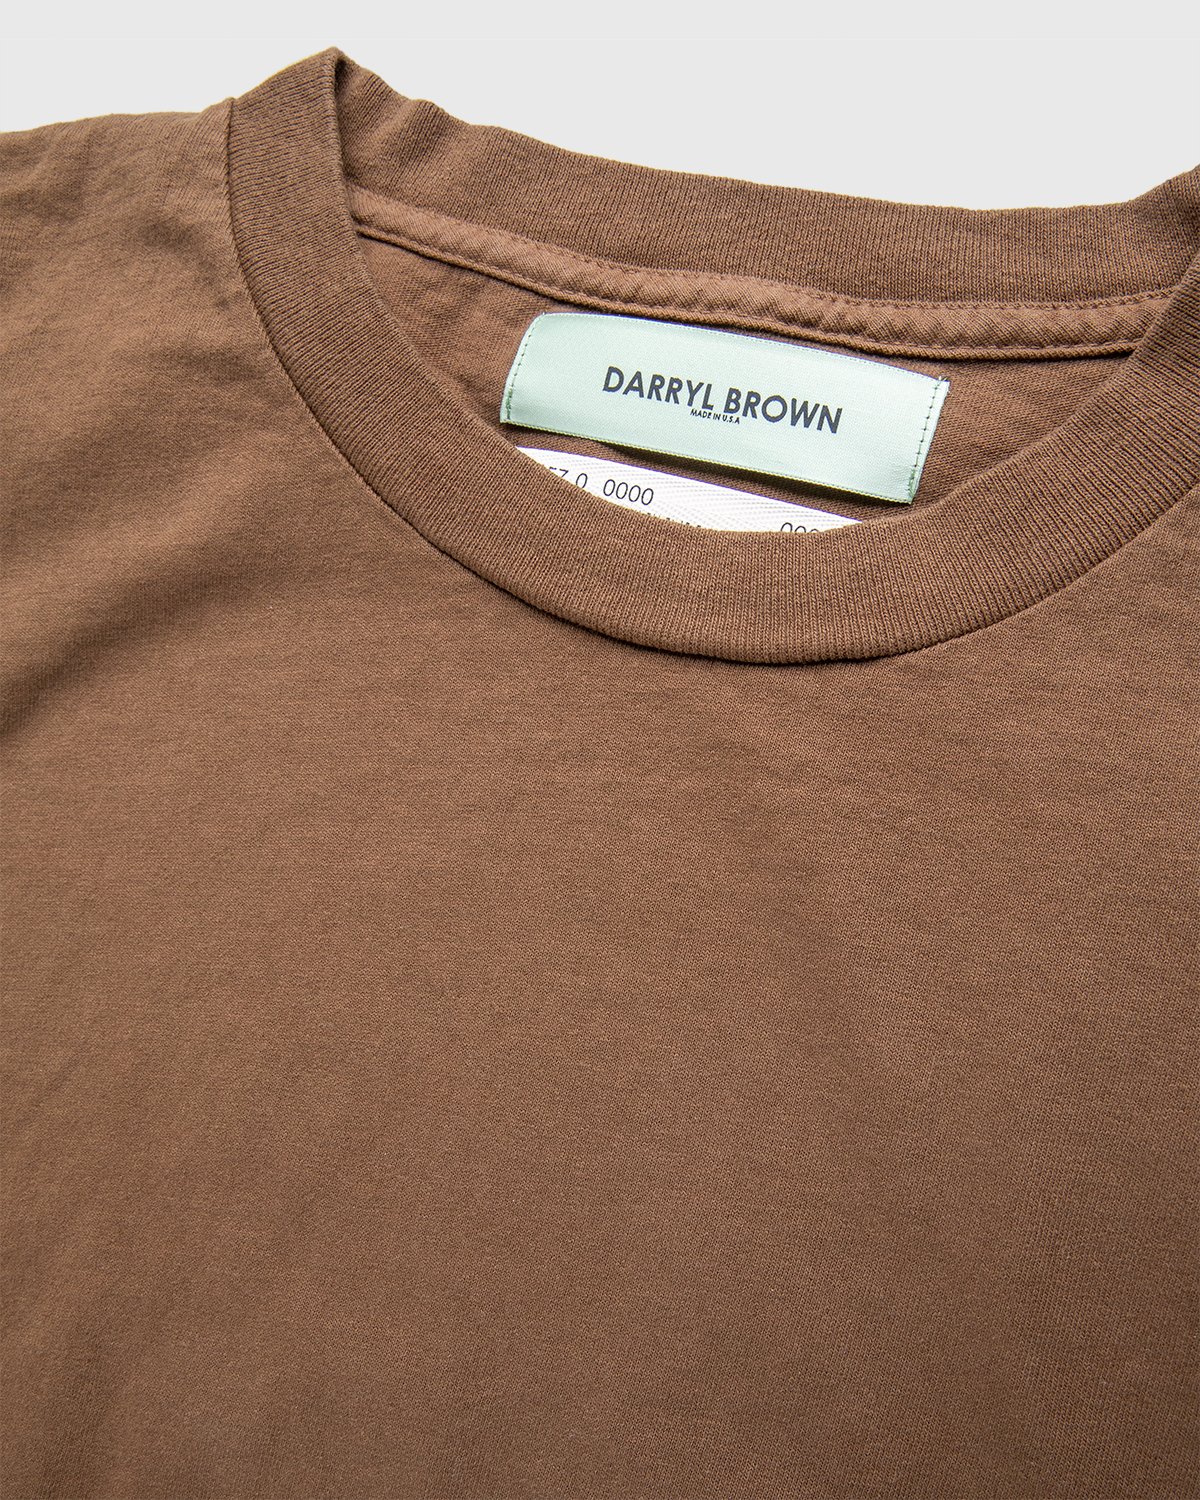 Darryl Brown - T-Shirt Coyote Brown - Clothing - Brown - Image 3